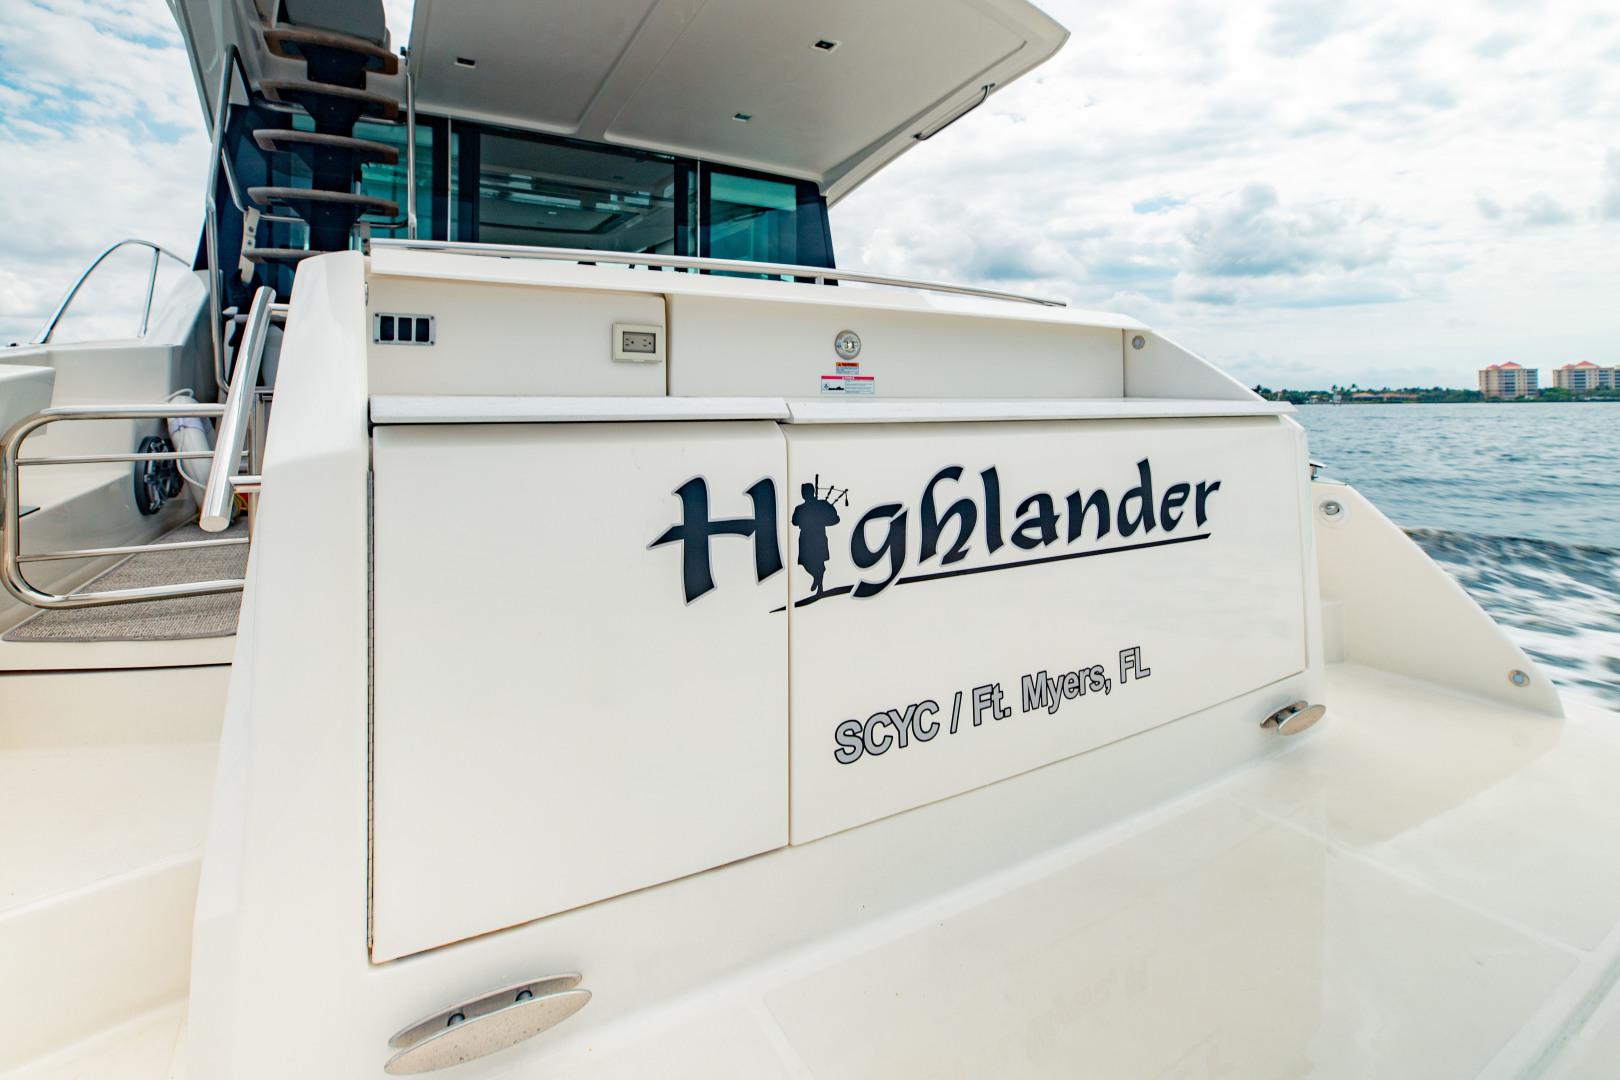 Highlander Yacht Photos Pics 